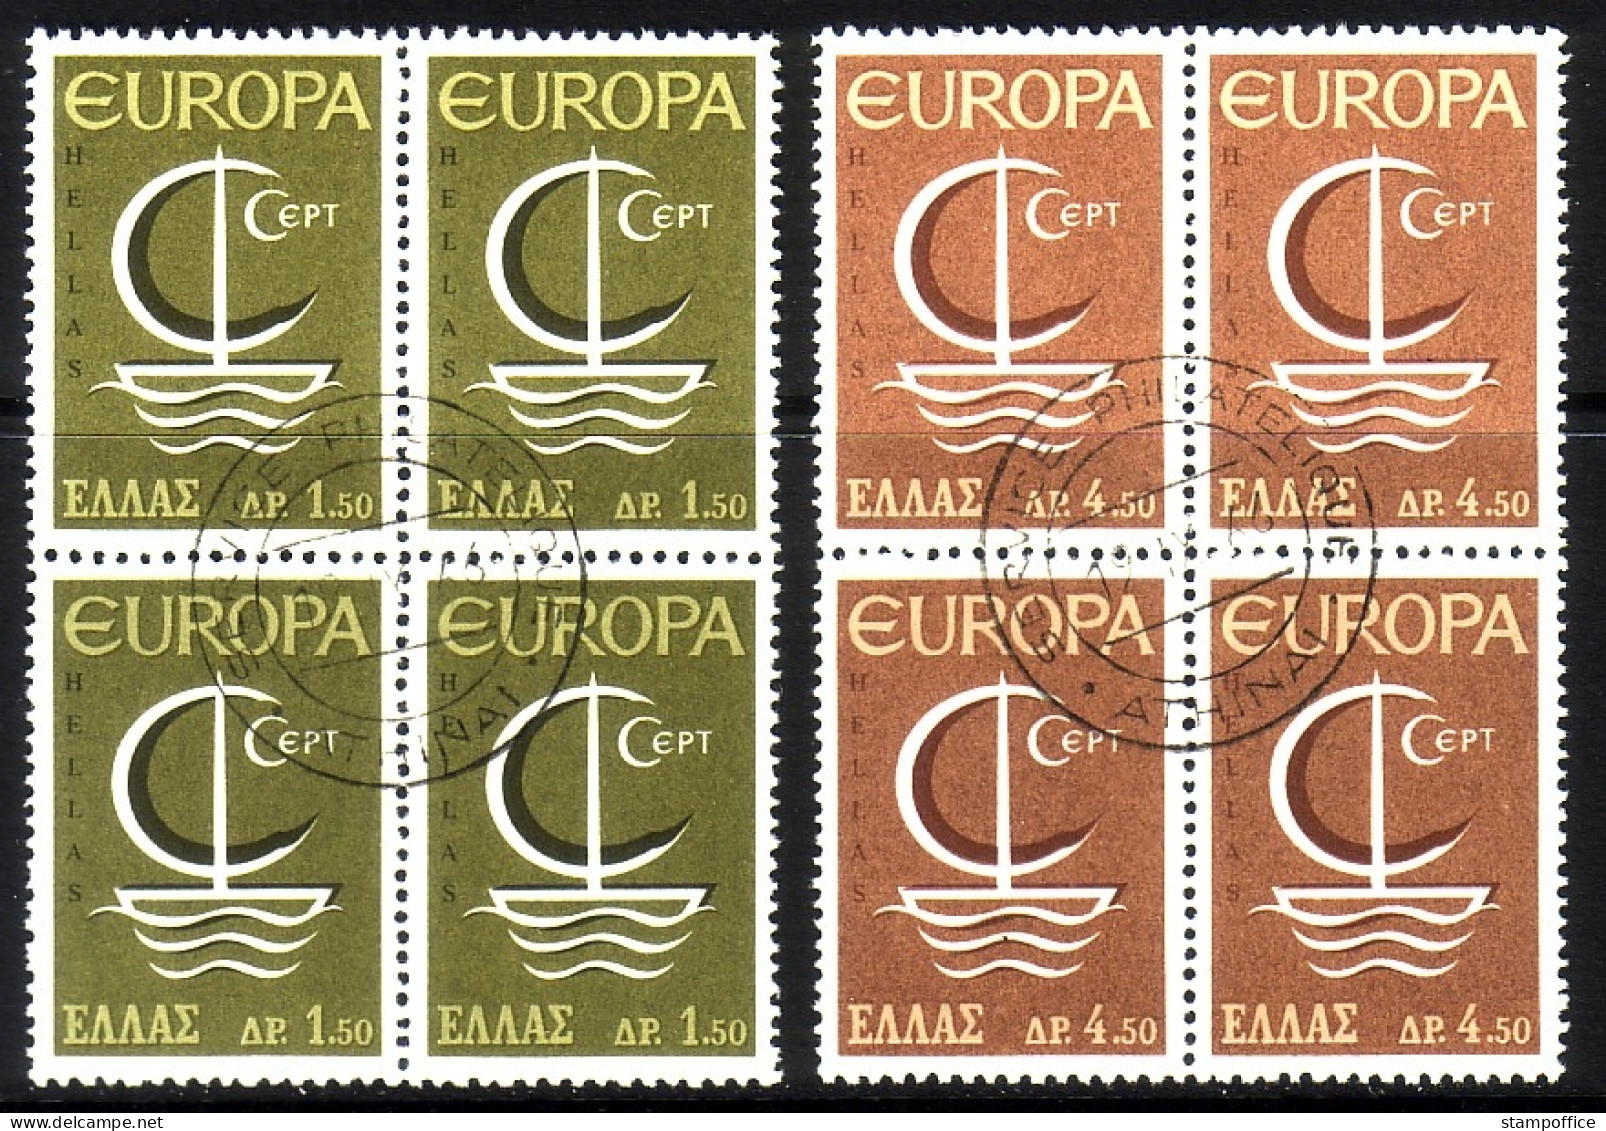 GRIECHENLAND MI-NR. 919-920 O 4er BLOCK EUROPA 1966 - SEGEL - 1966